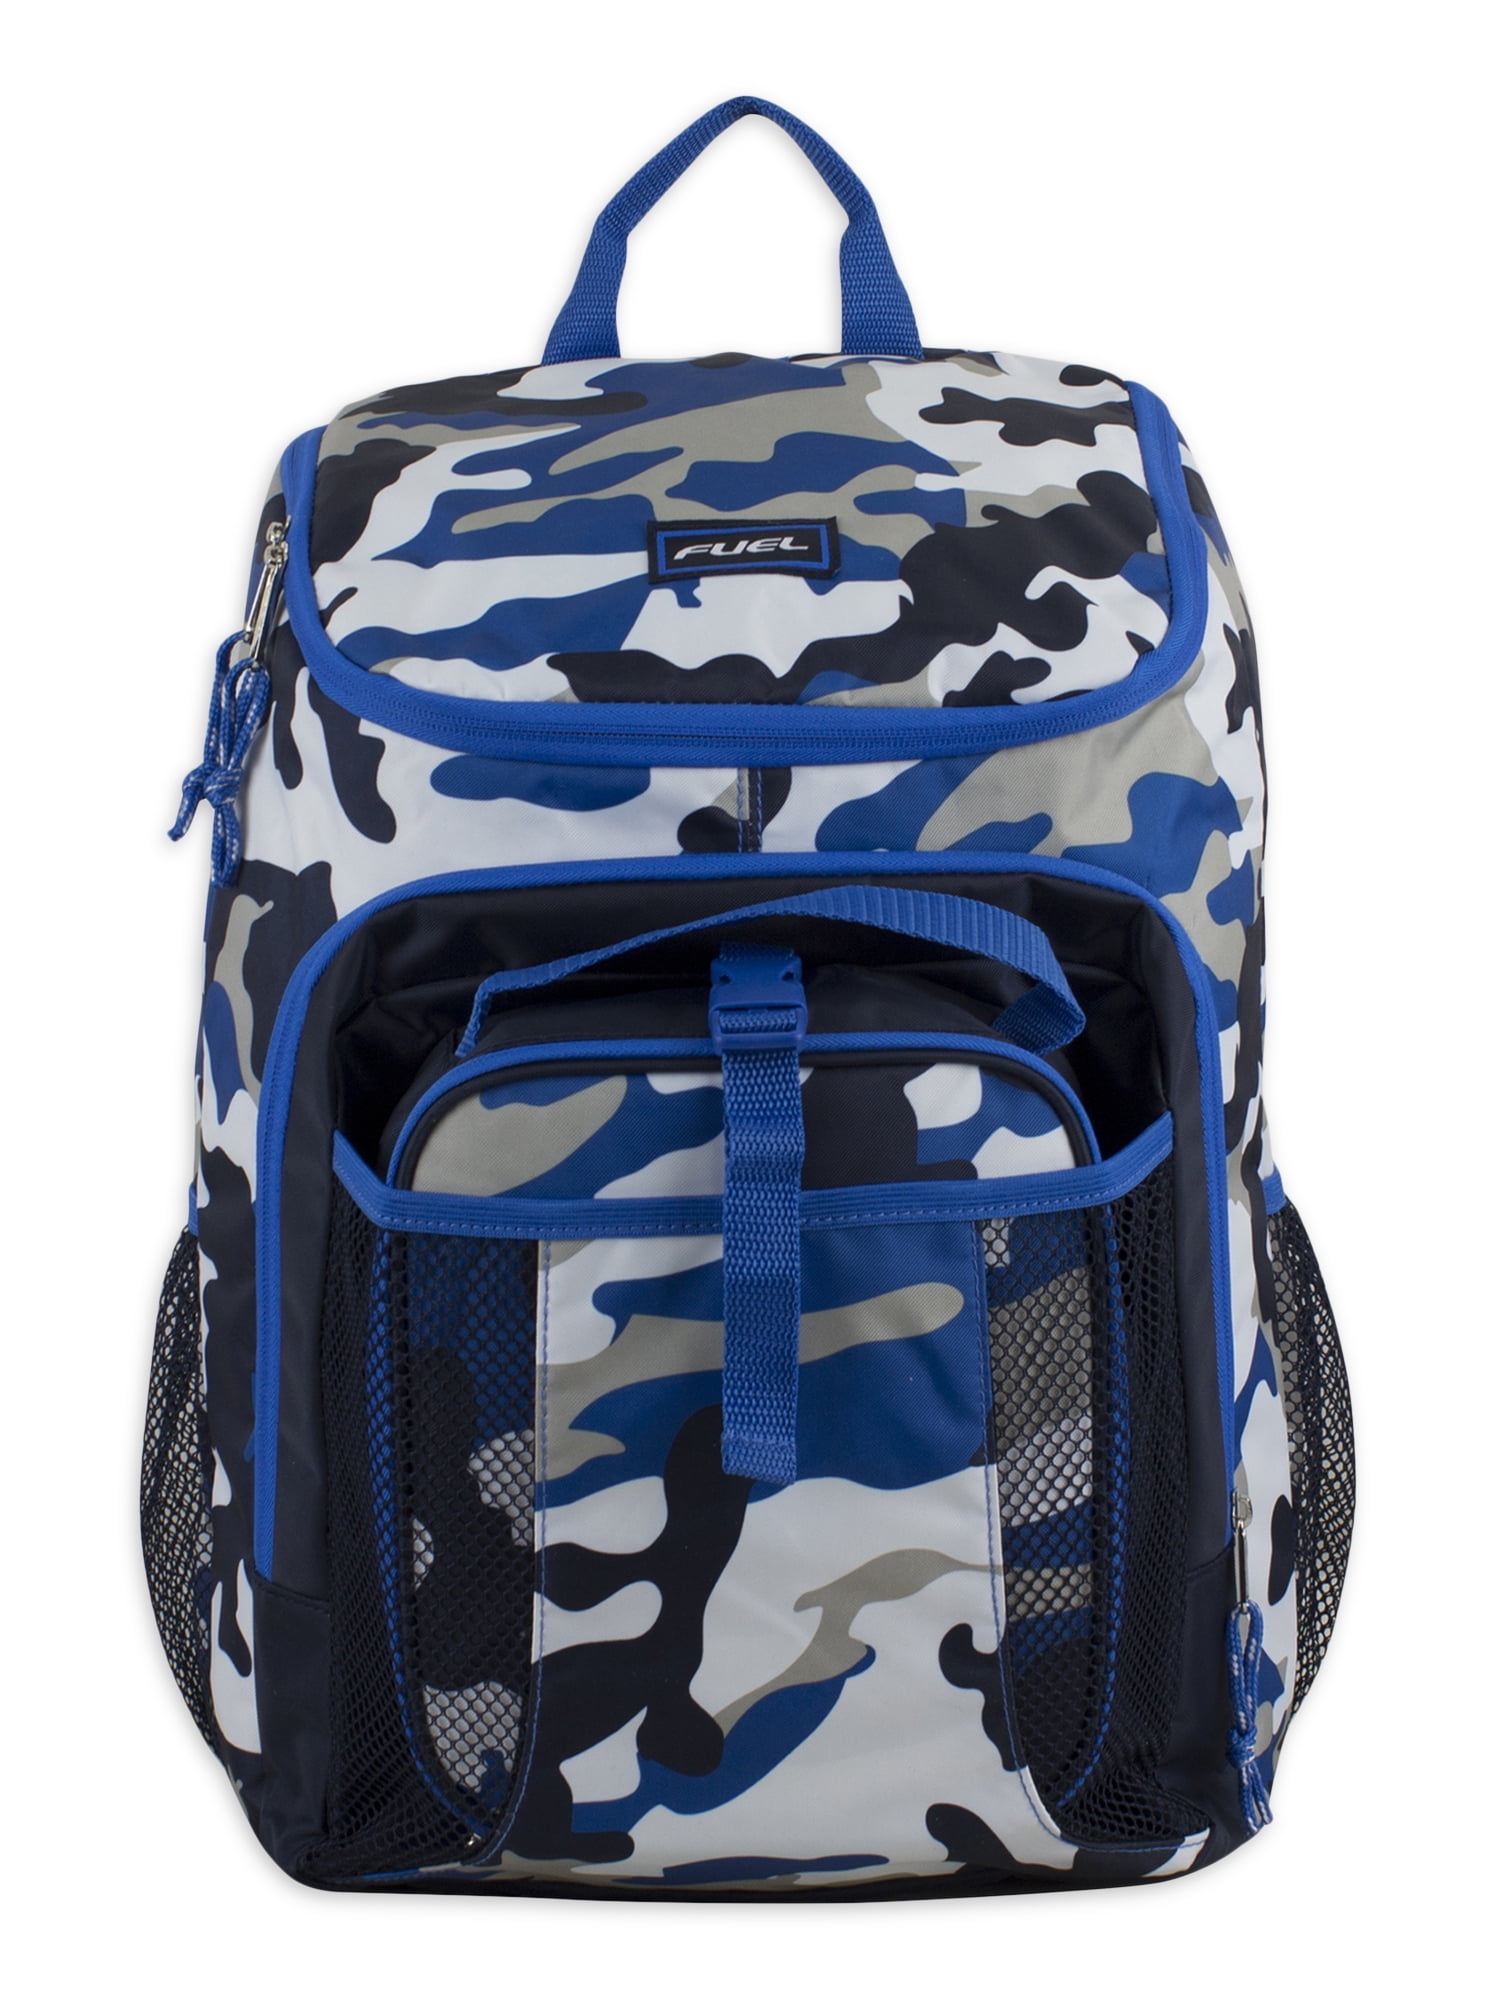 Two-Minute Review: Osprey Gearkit 40L Duffel Bag